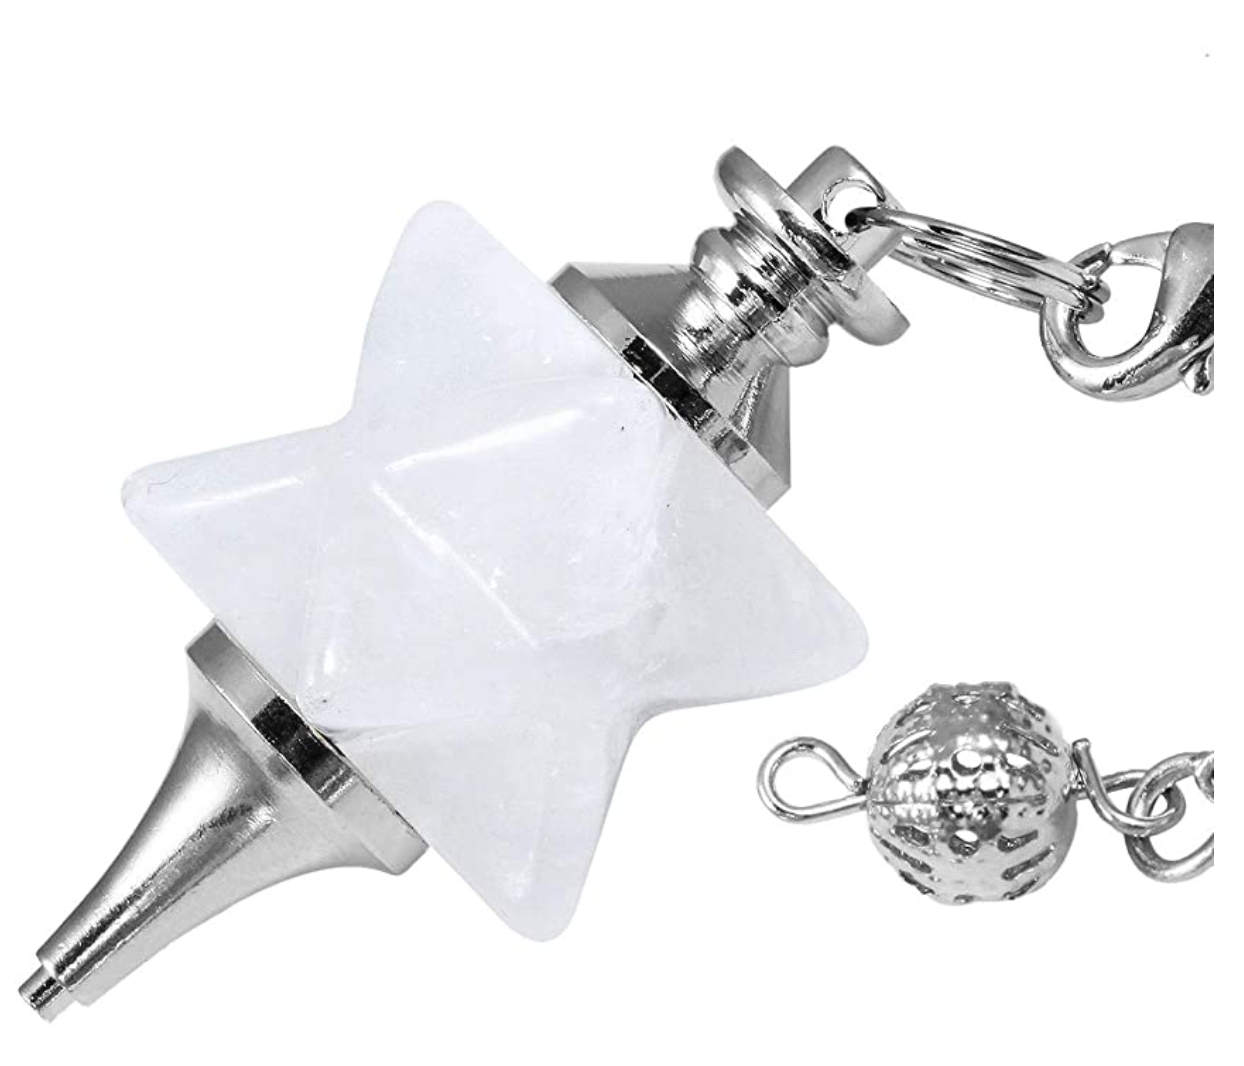 Crystal Merkaba Star Tetrahedron Necklace Pendulum Healing Reiki Wand Pendant Wond Chain Sacred Geometry Kabbalah Jewelry